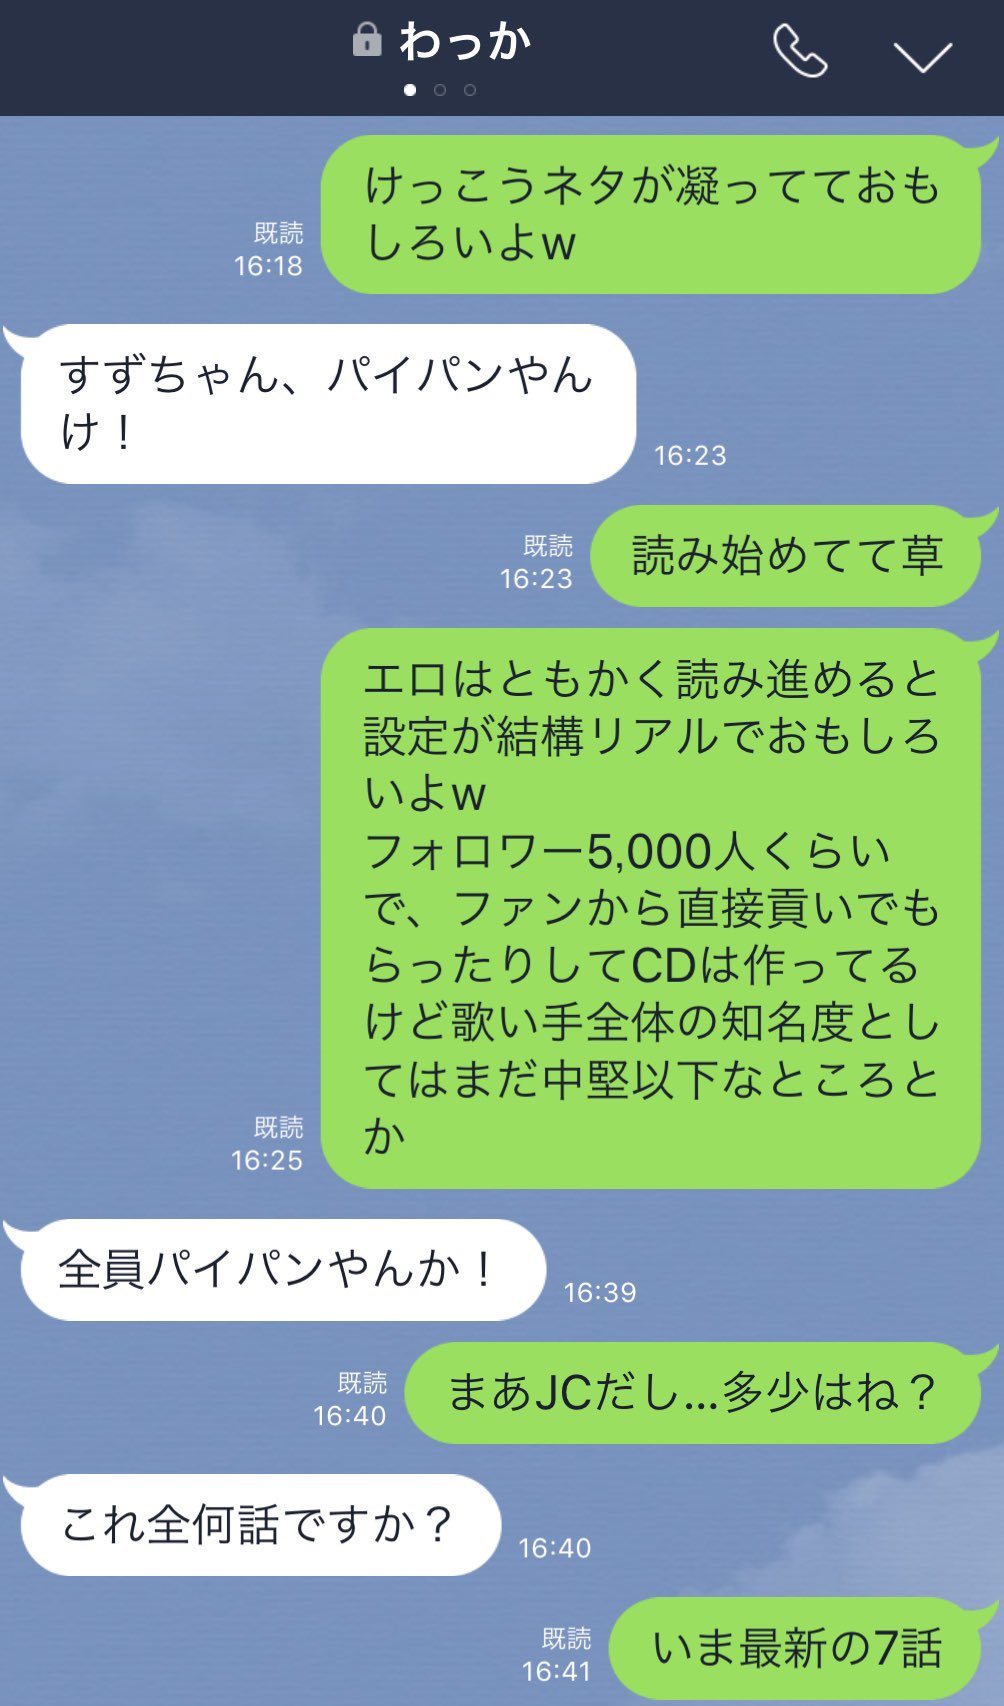 Jc　ぱいぱん seglagear.com